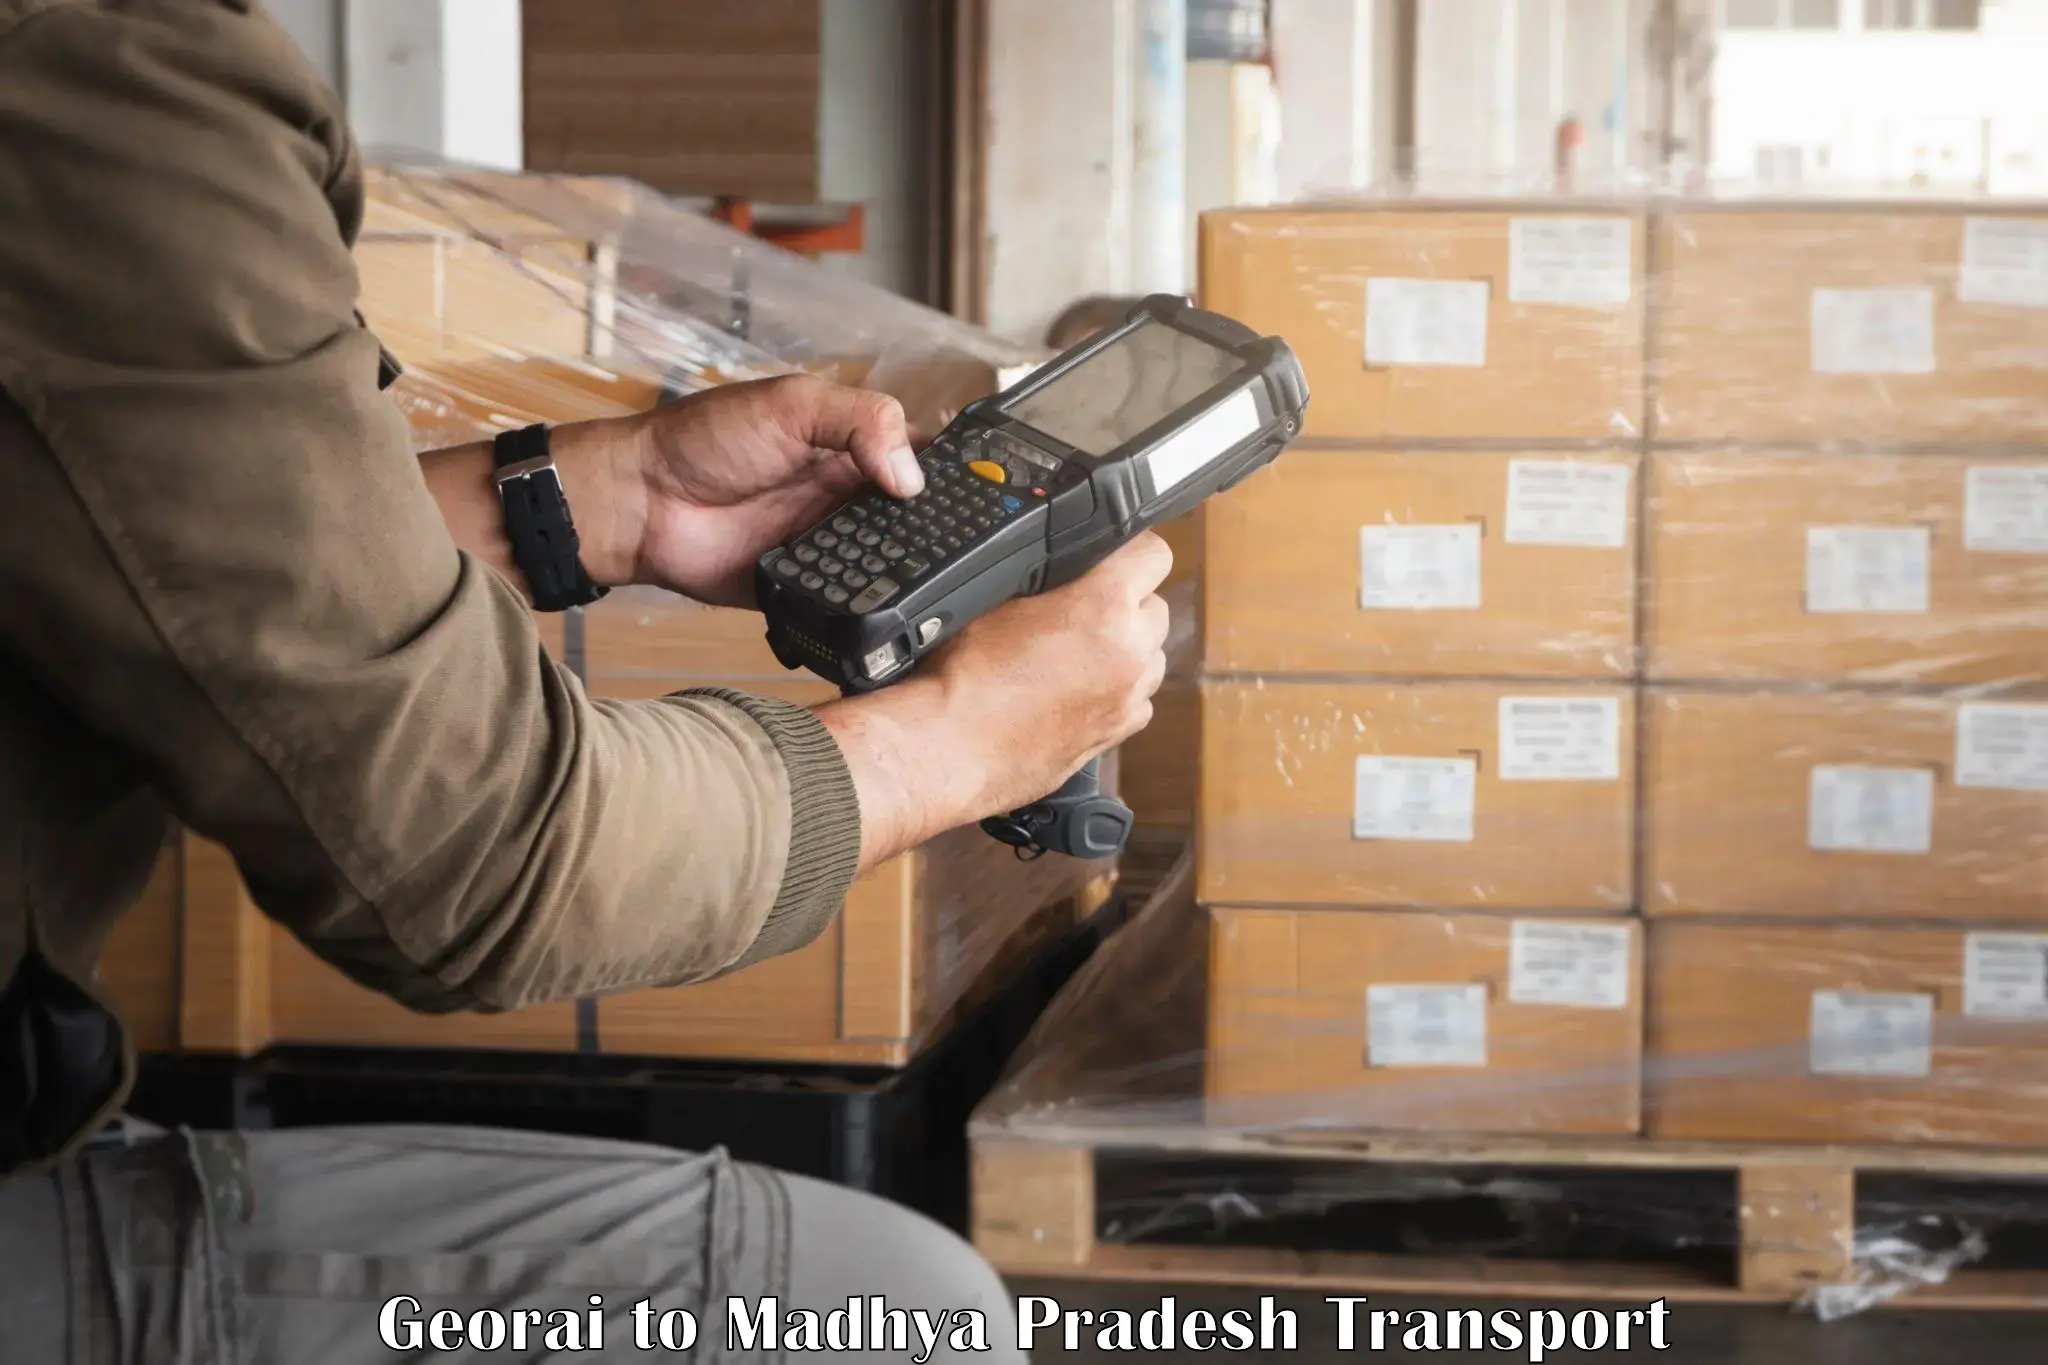 Commercial transport service Georai to Madhya Pradesh